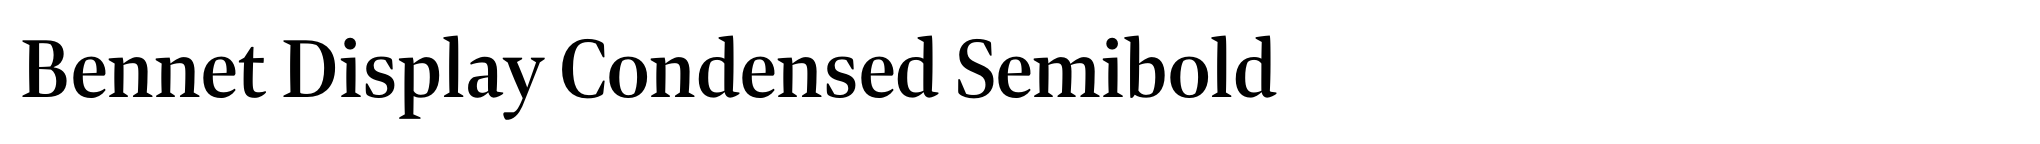 Bennet Display Condensed Semibold image